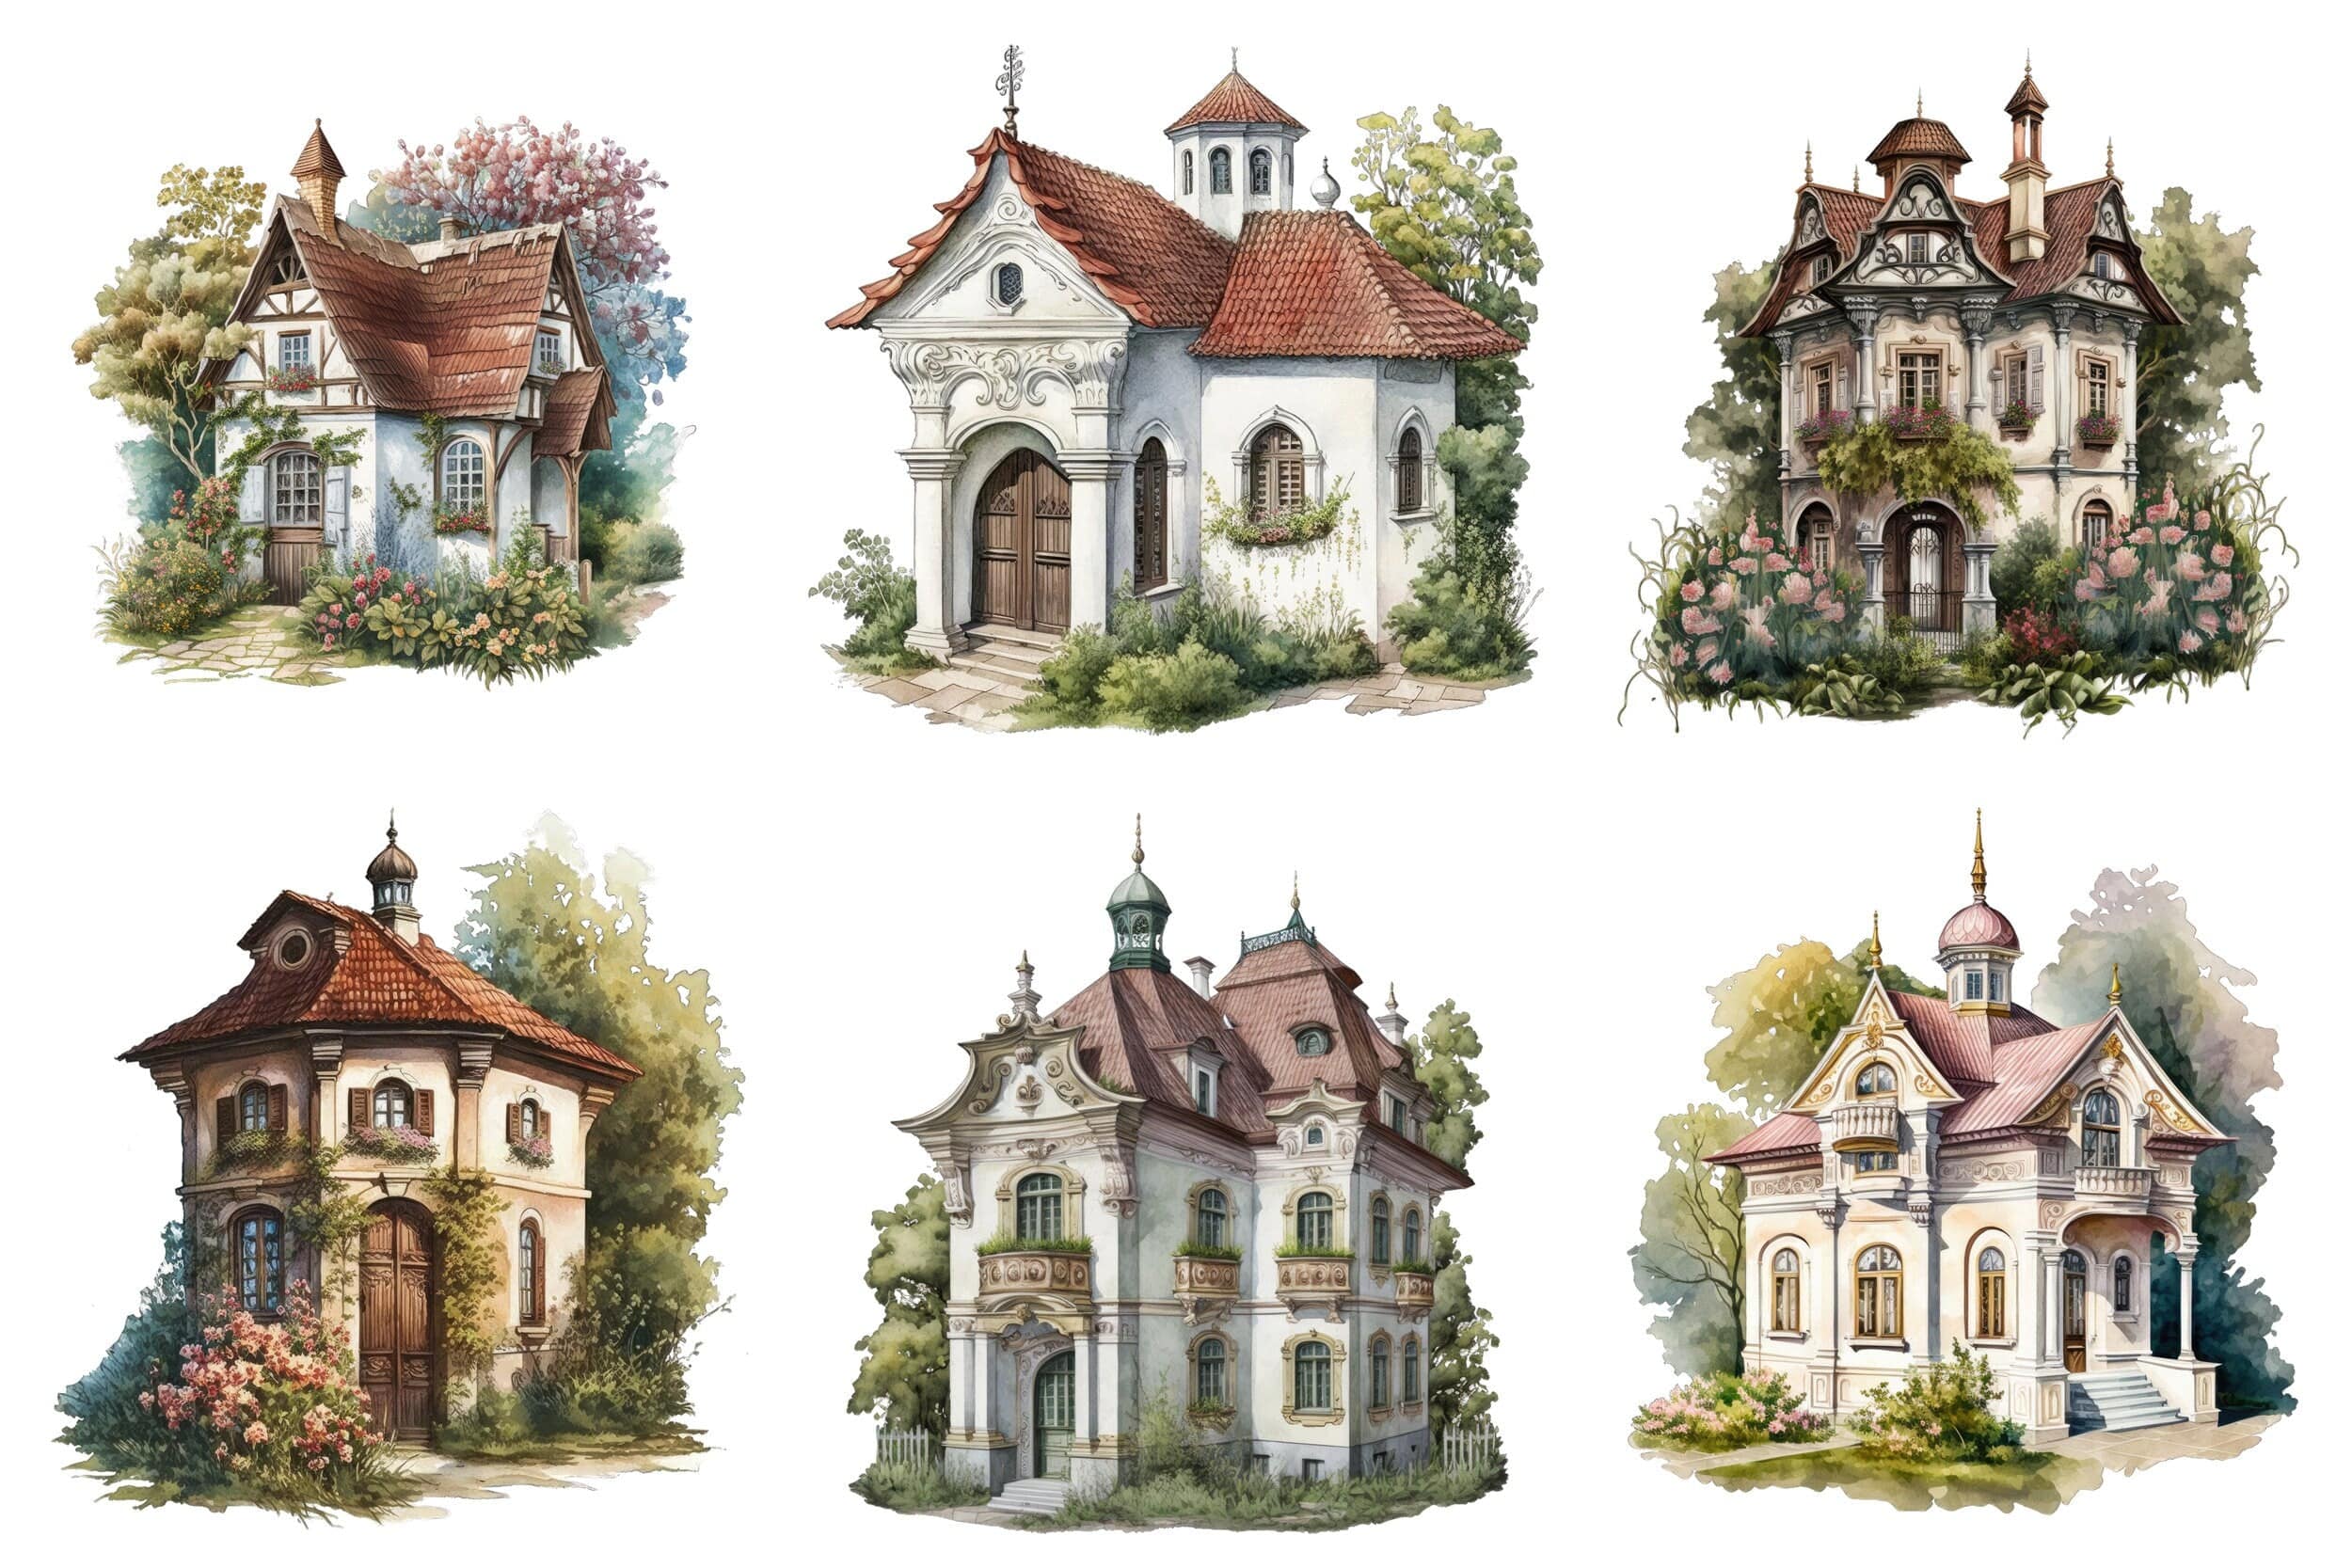 Elegant Baroque Cottage Watercolor Set - 65 Transparent Images for Your Creative Projects Digital Download Sumobundle